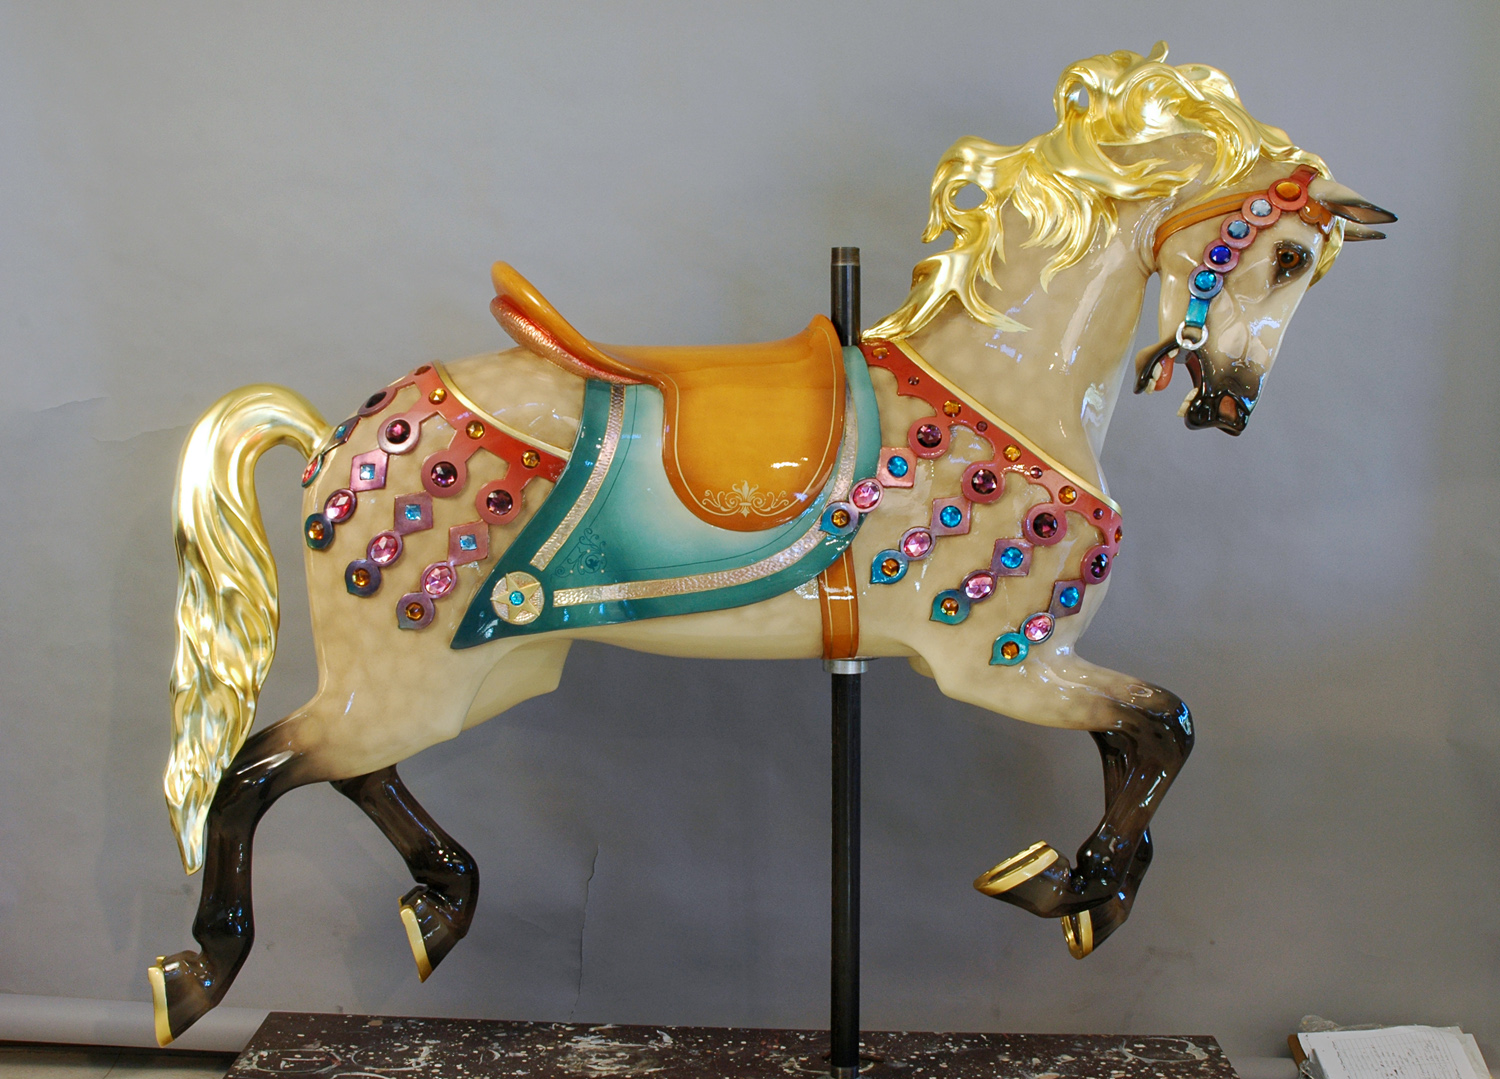 1927-Illions-supreme-carousel-horse-restored-pam-hessey-artist